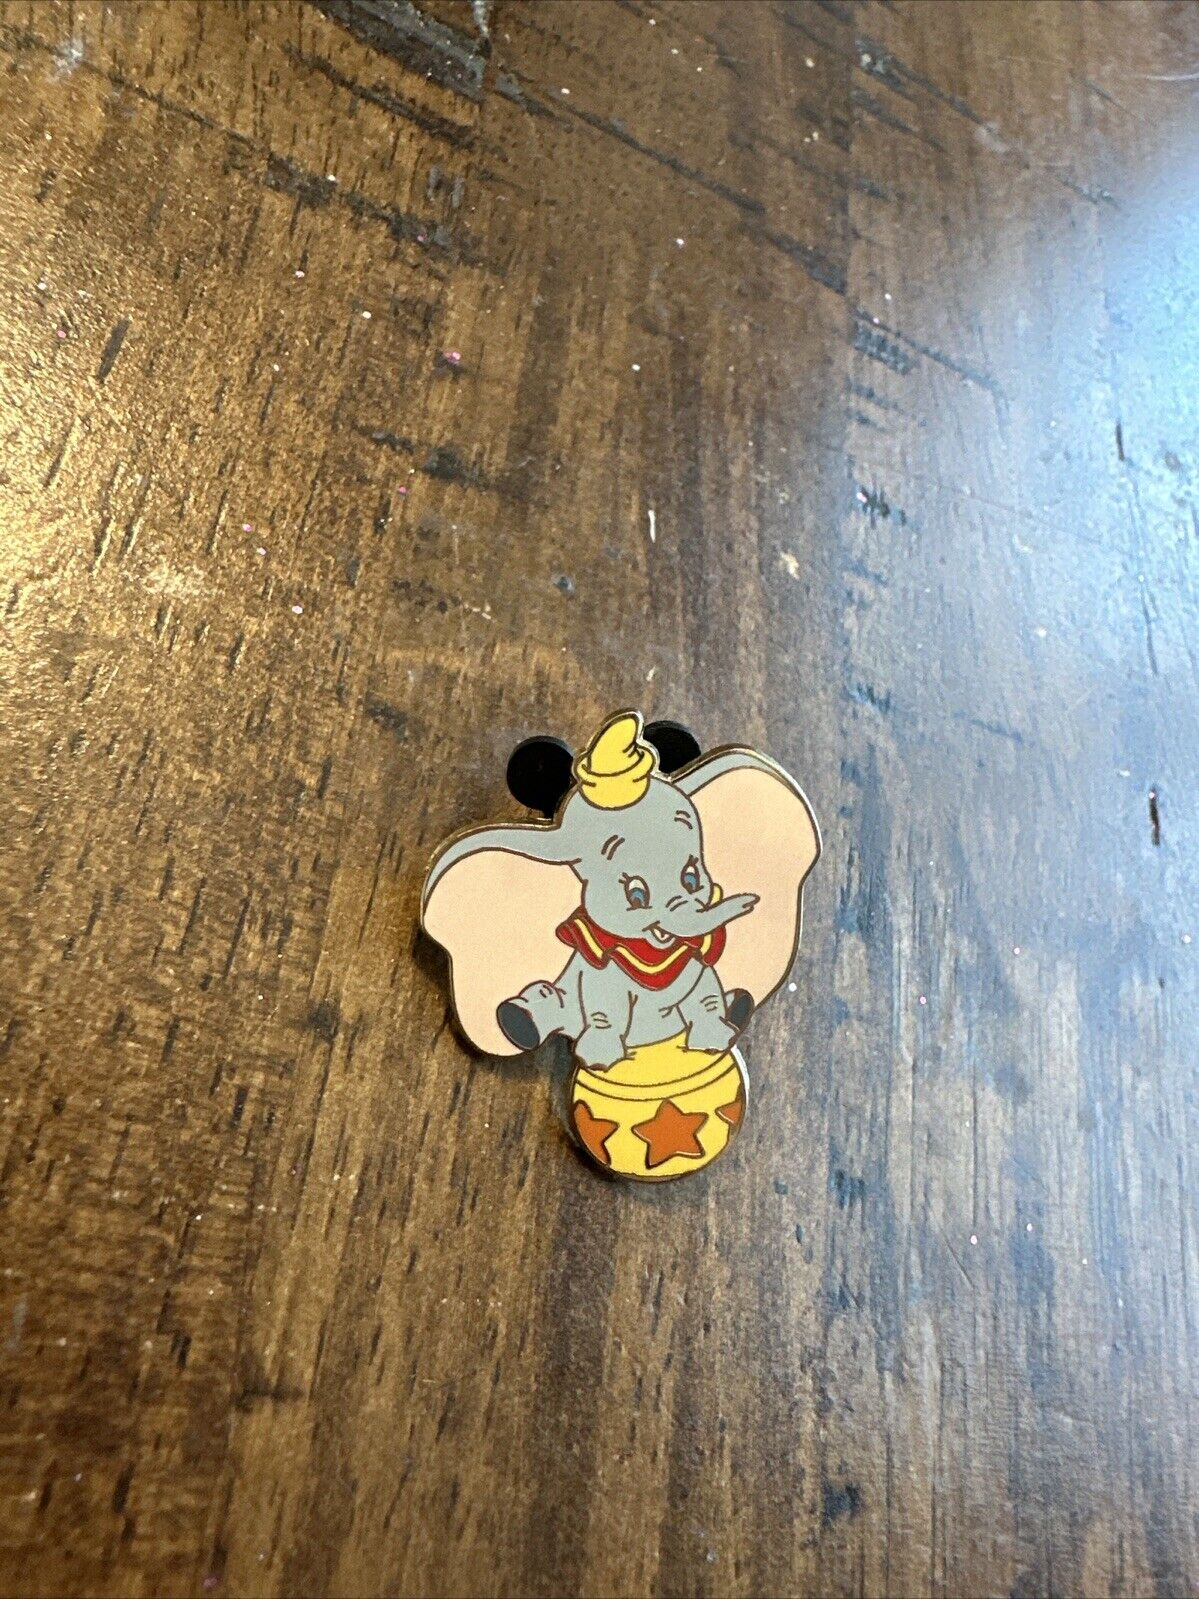 2002 Disney Dumbo The Clown On Circus Ball Trading Pin #40921